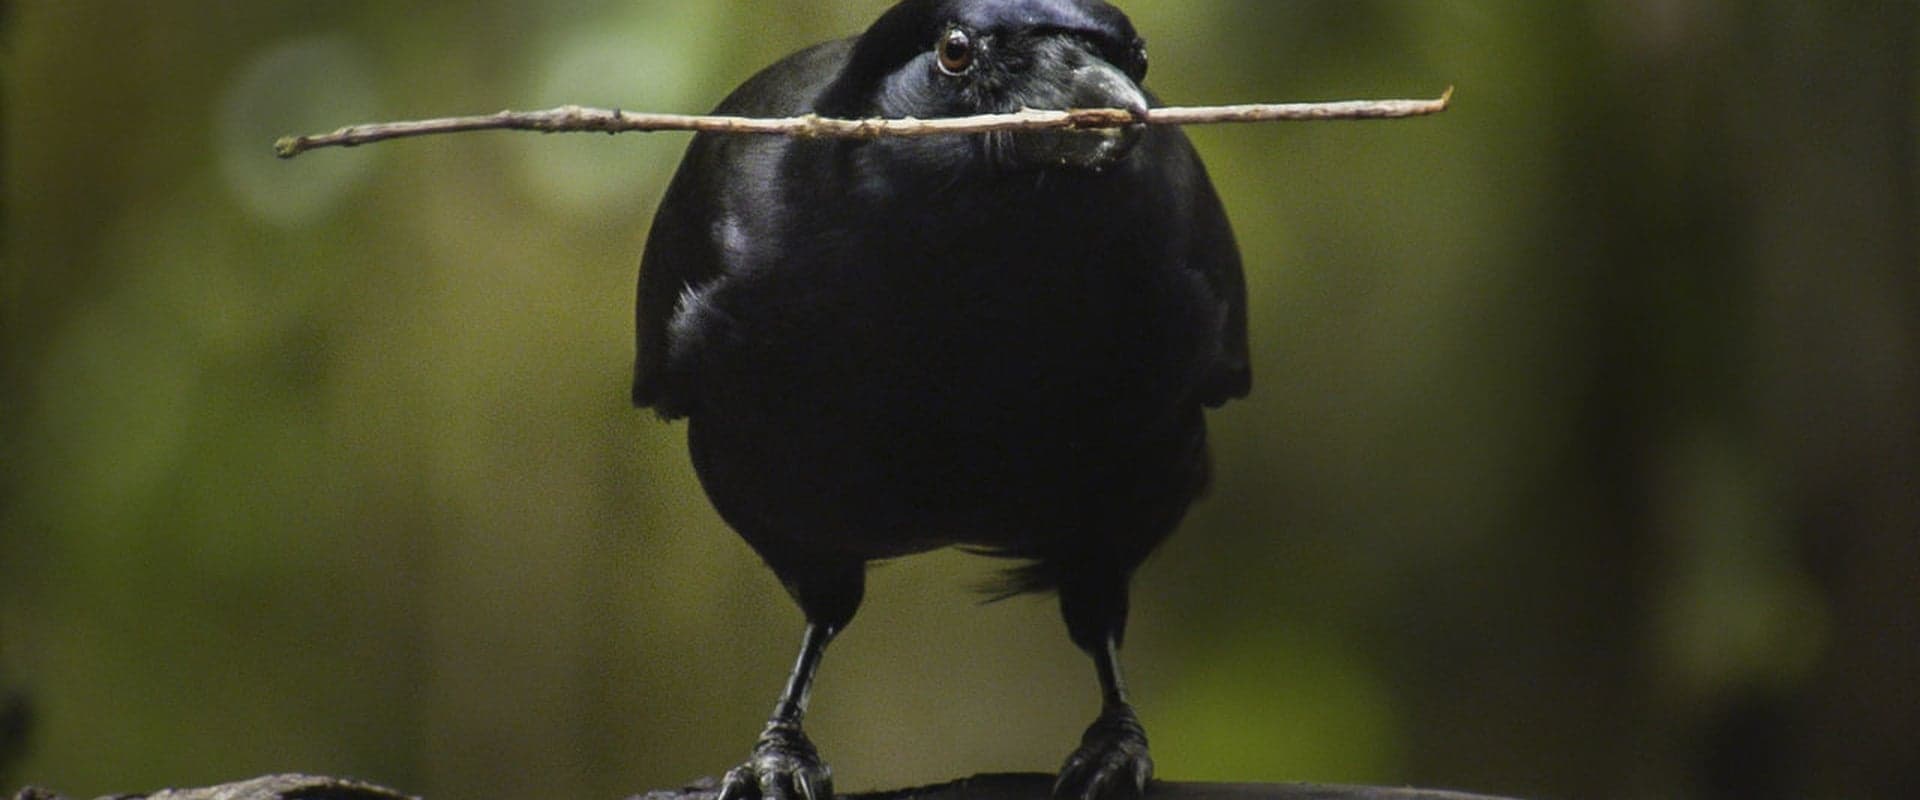 Beak & Brain - Genius Birds from Down Under